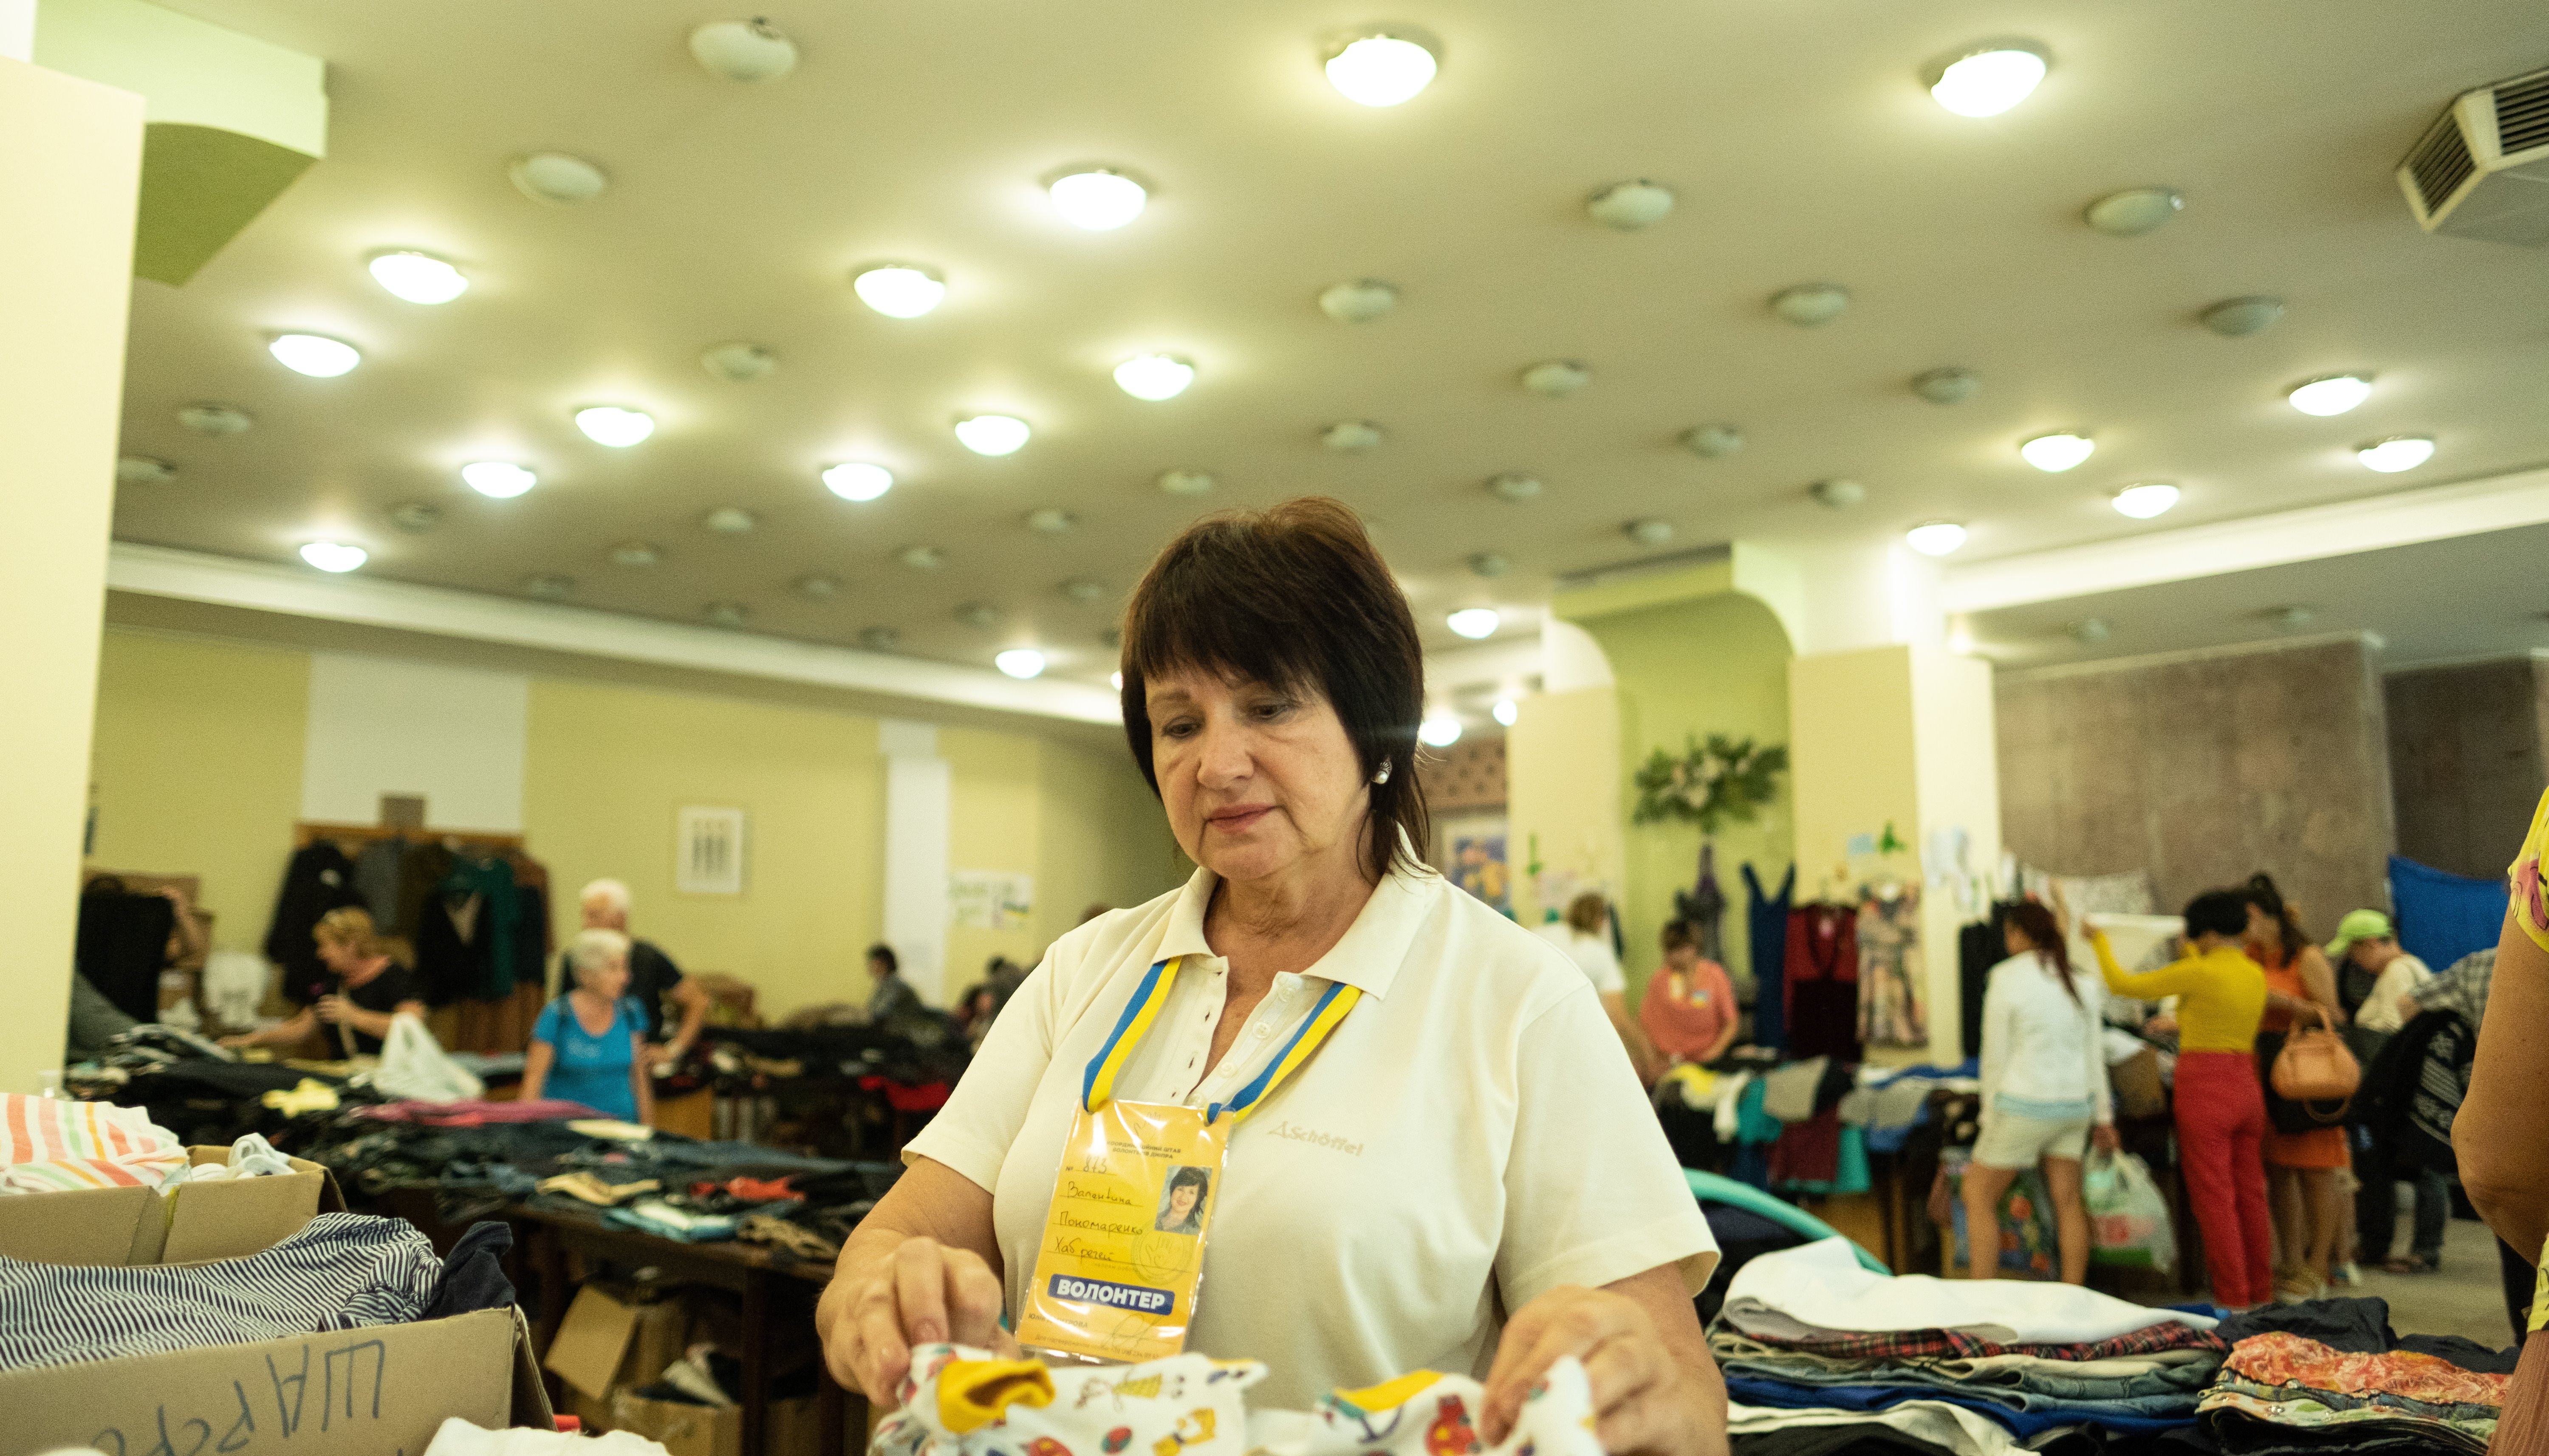 Read Older people forming 'second front' of volunteers in Ukraine by HelpAge International